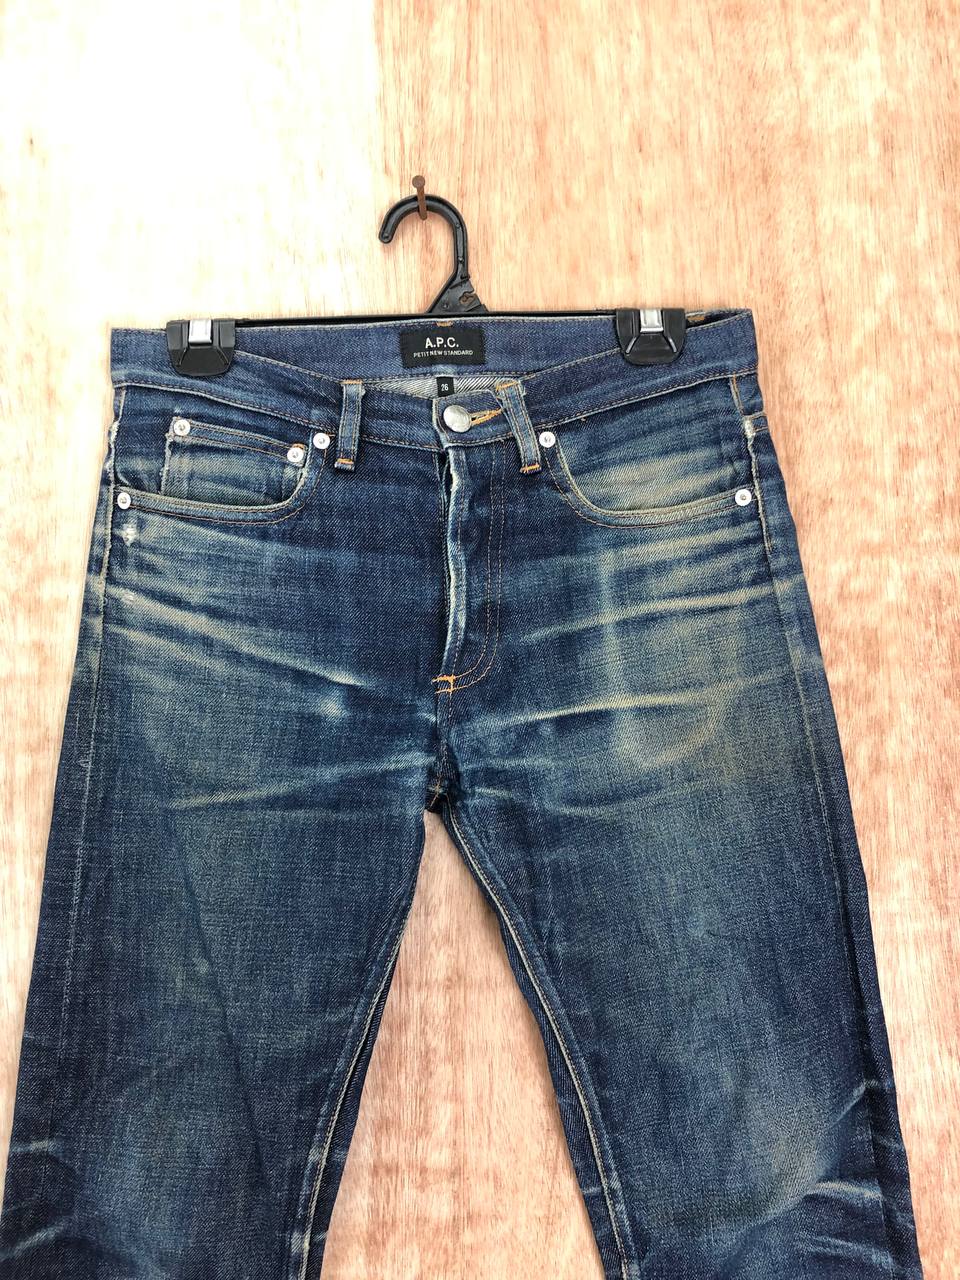 APC Petit Standard Jeans Distressed Selvedge - 3